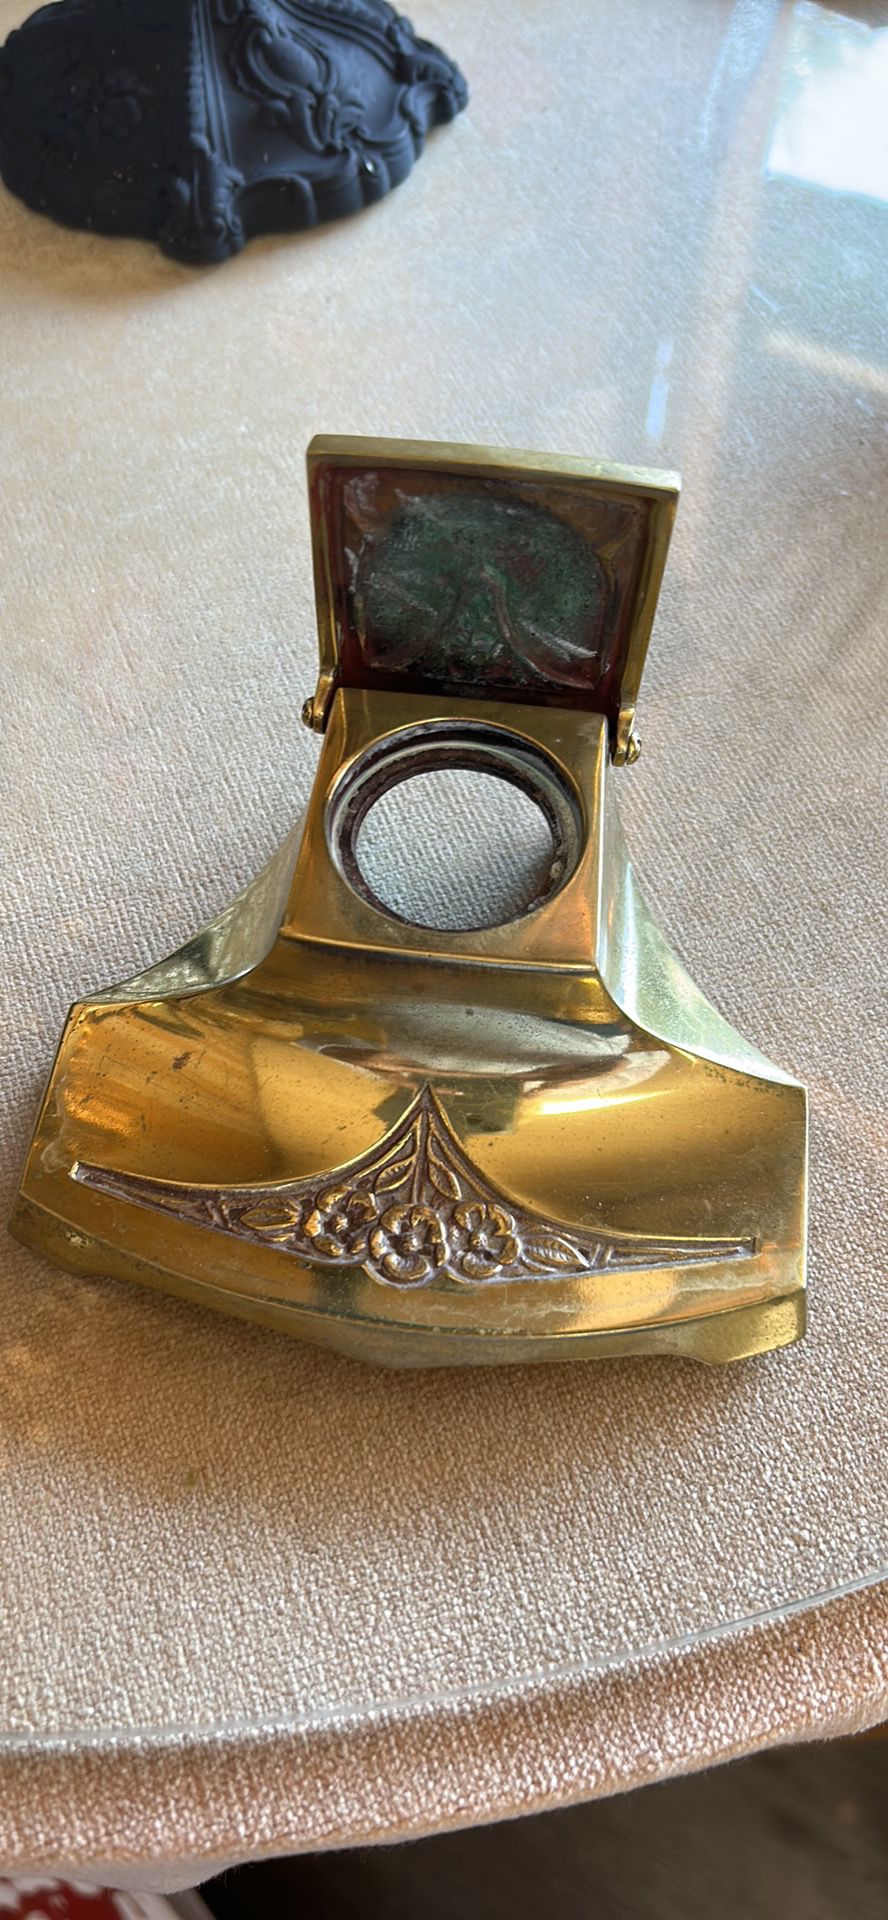 Antique bronze Inkwell missing glass insert